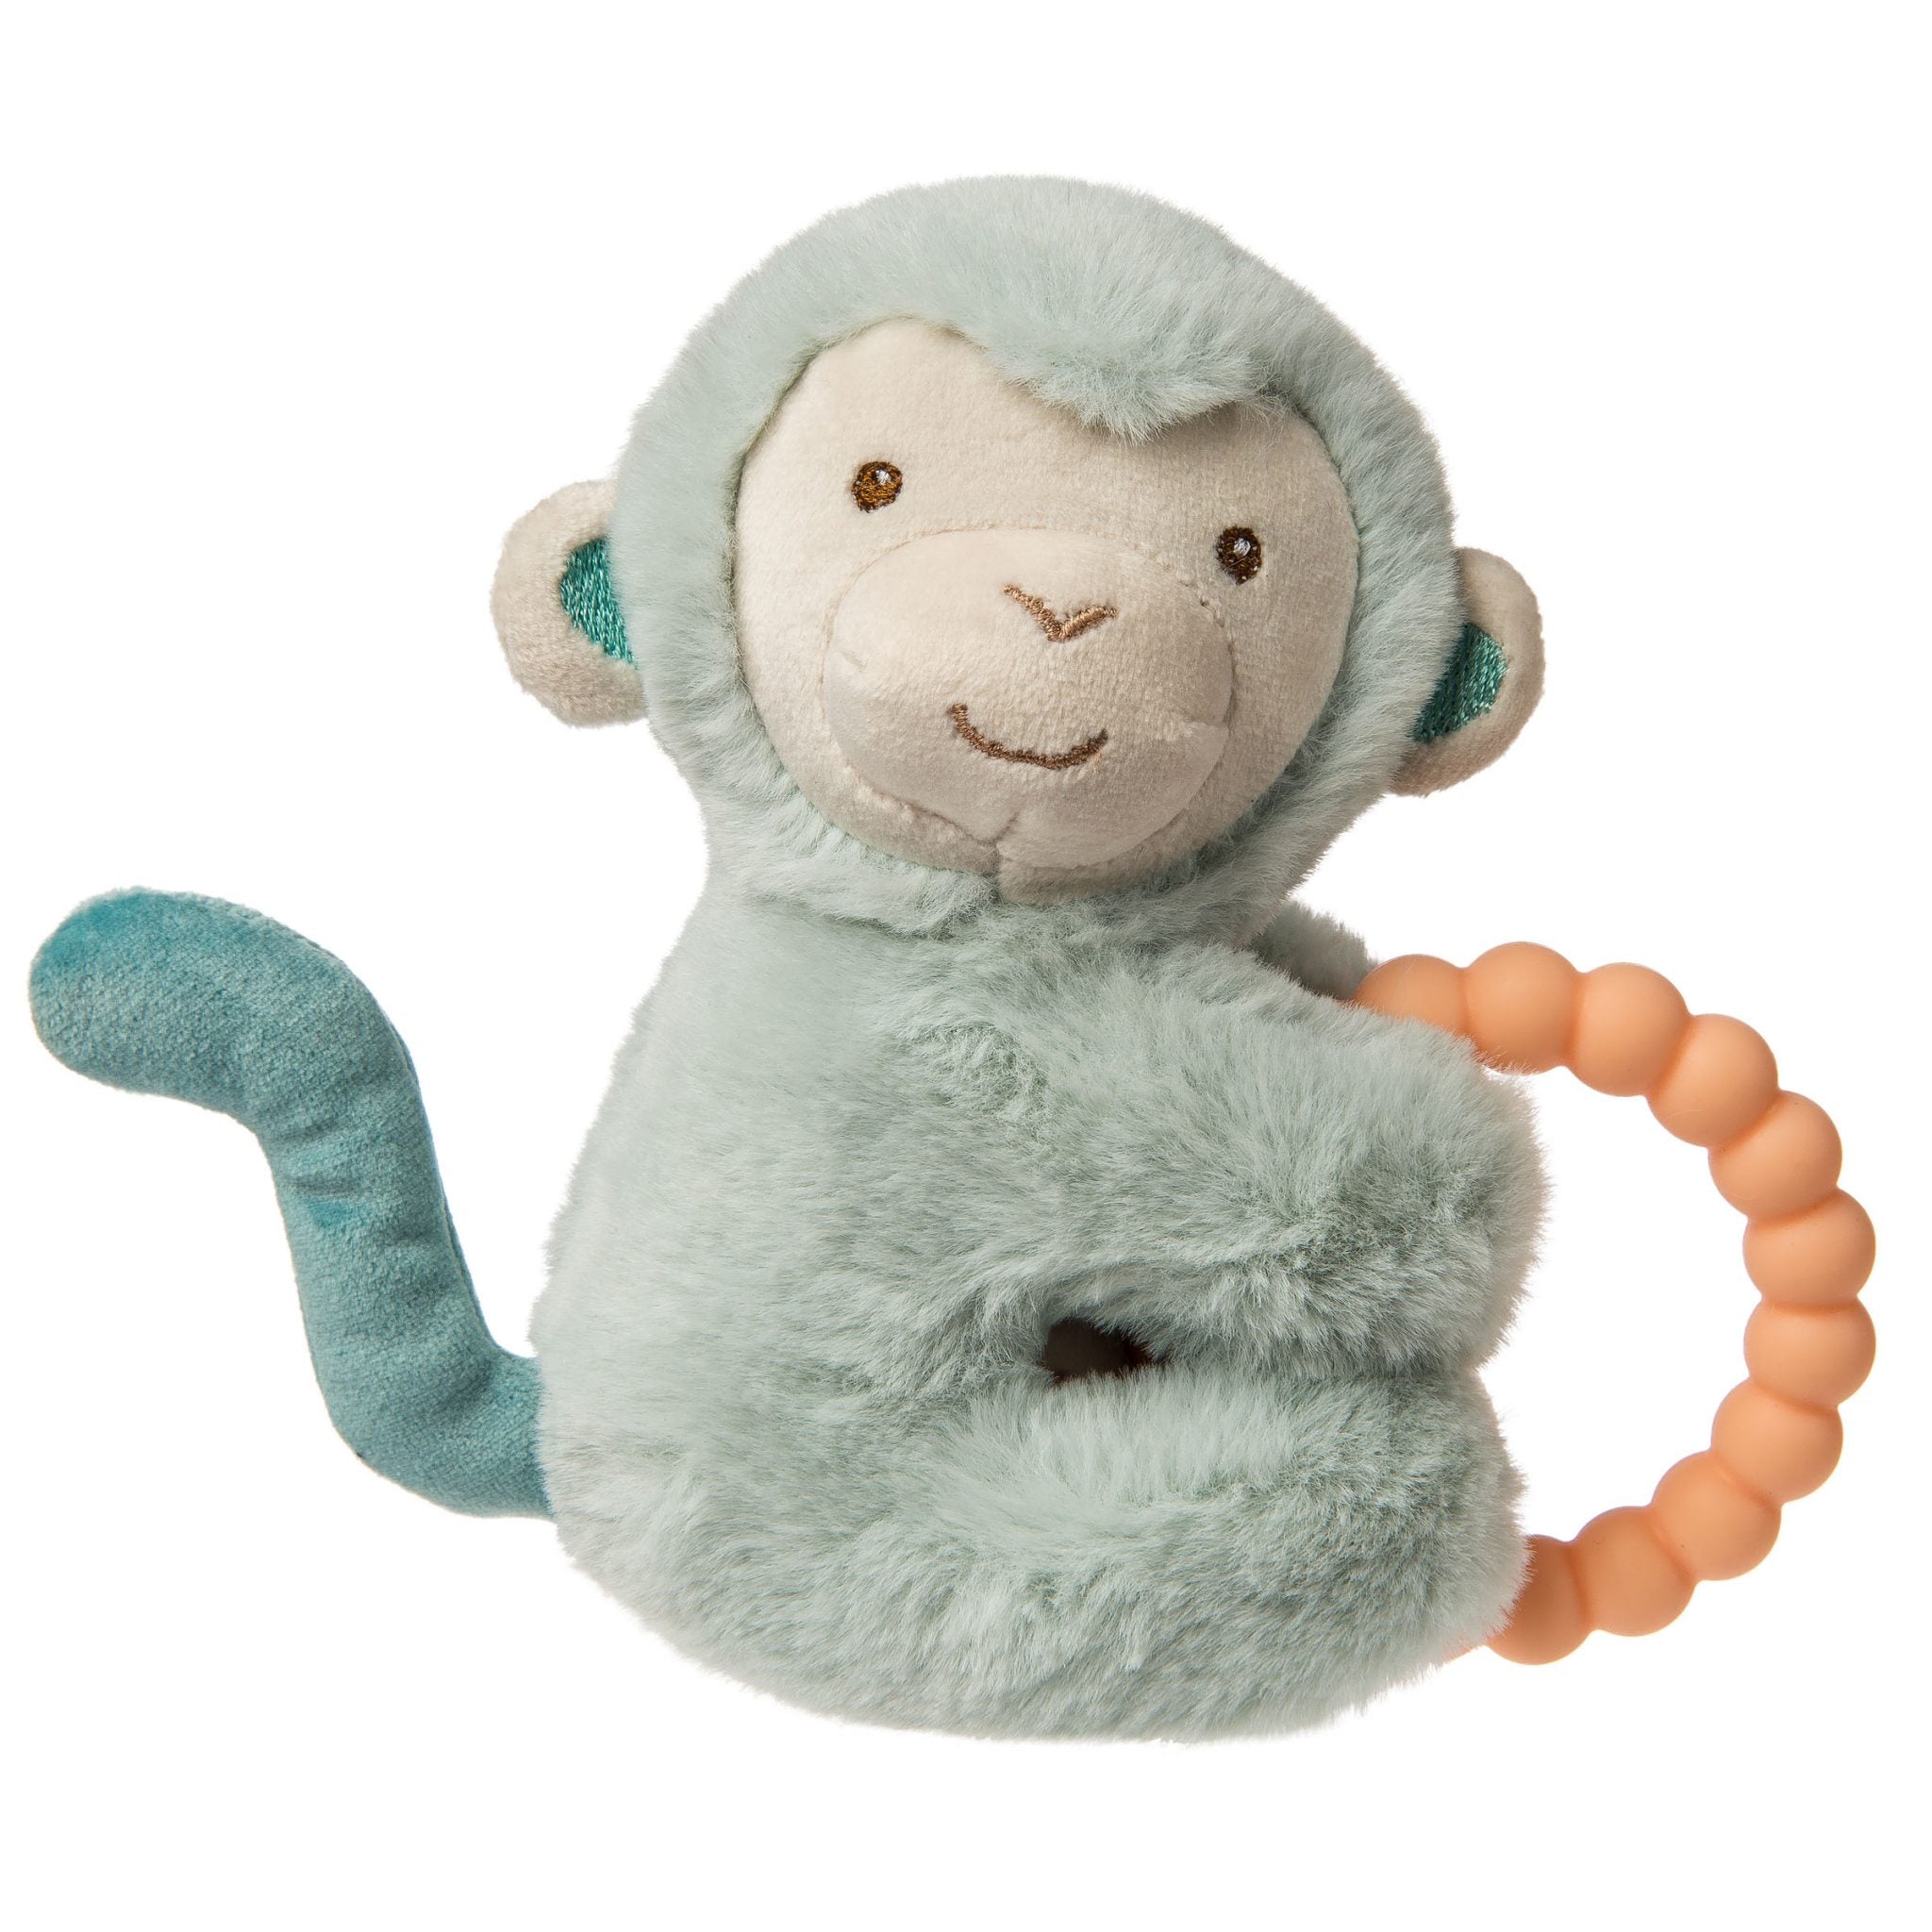 Seafoam-coloured monkey soft toy teether